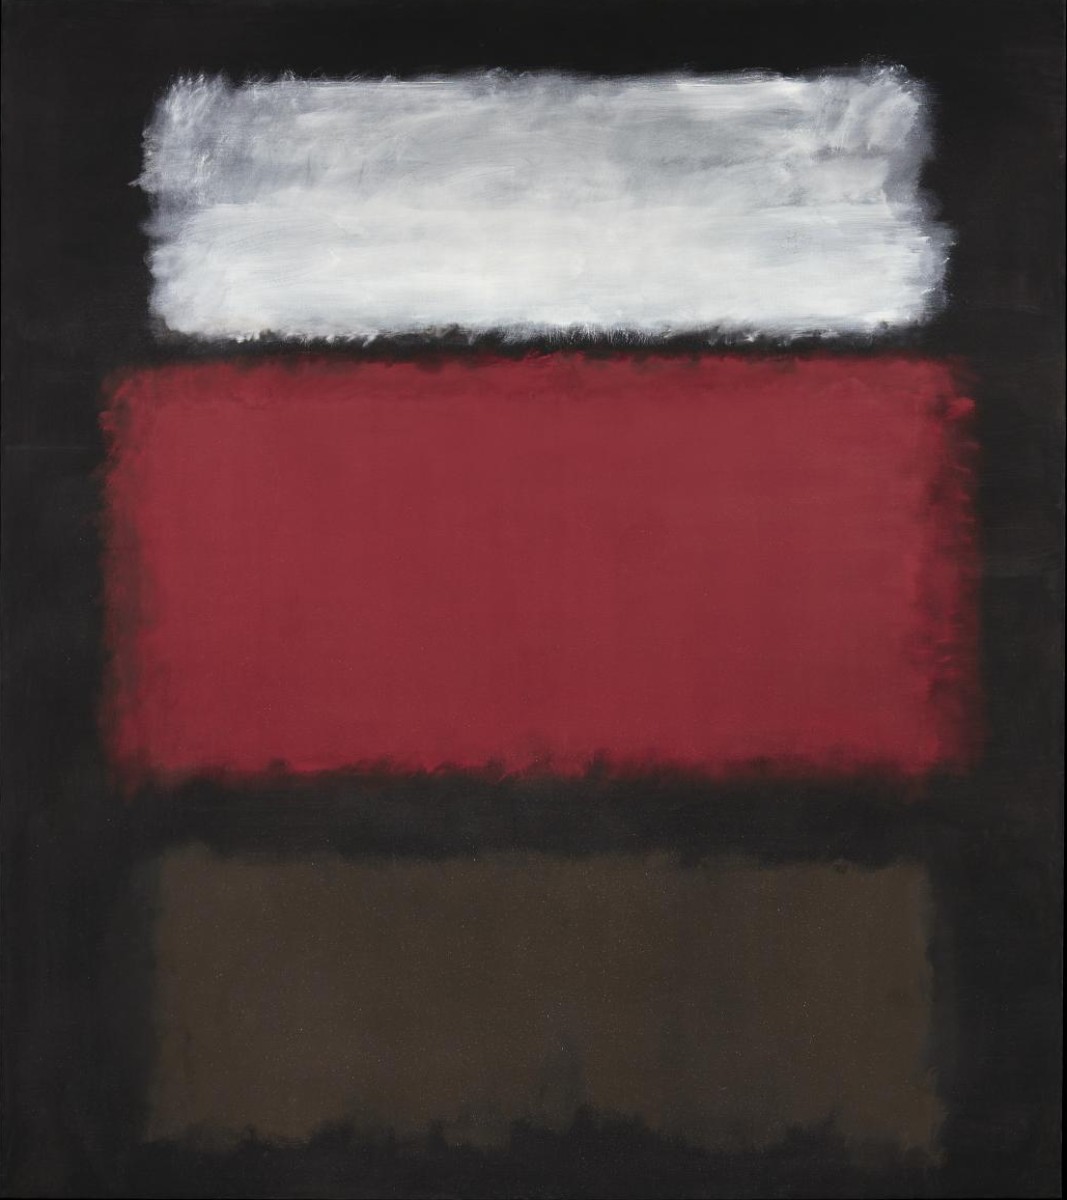 Mark Rothko. No. 1, White and Red